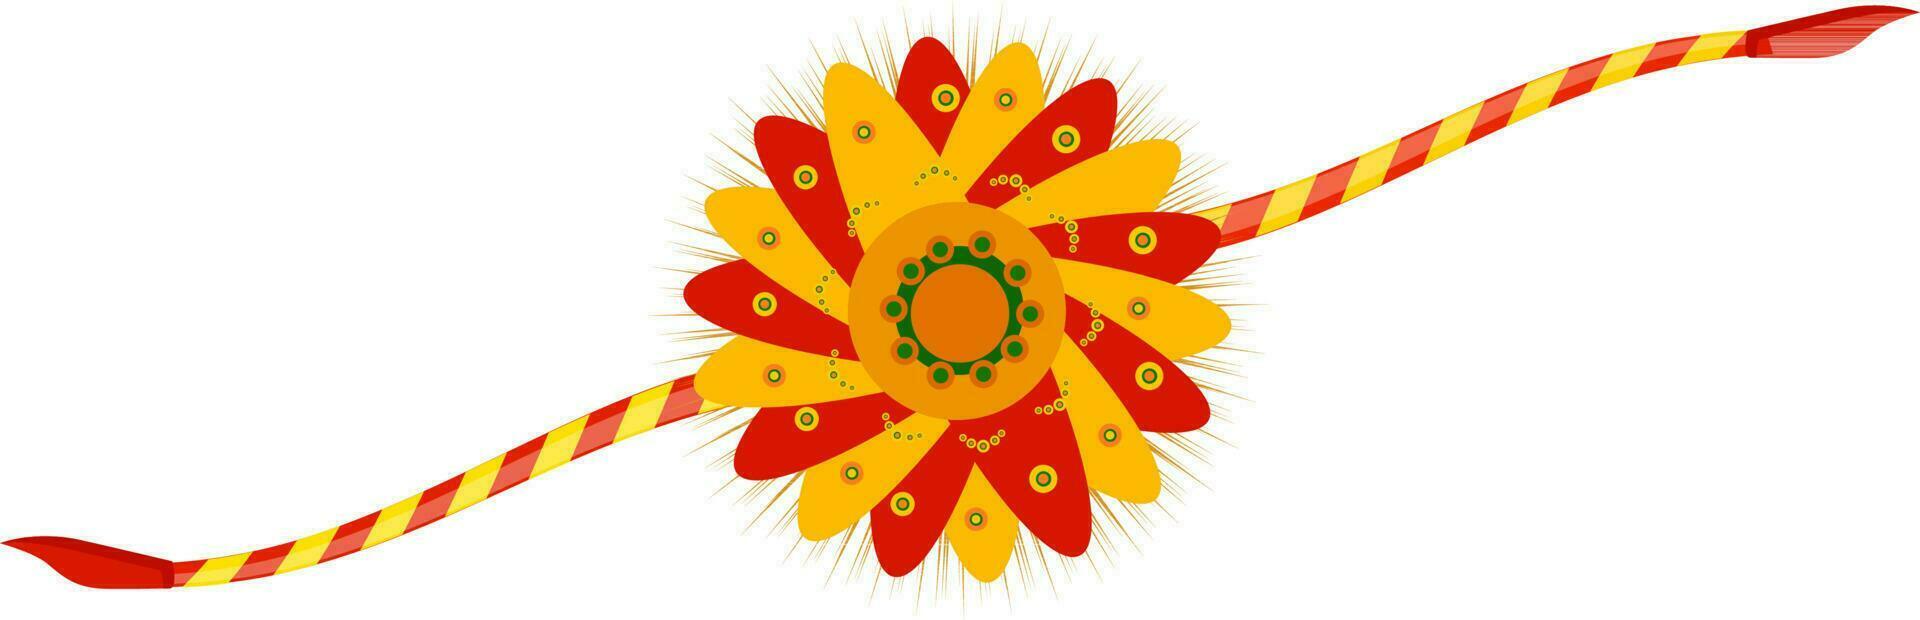 Beautiful red and yellow Rakhi design. vector